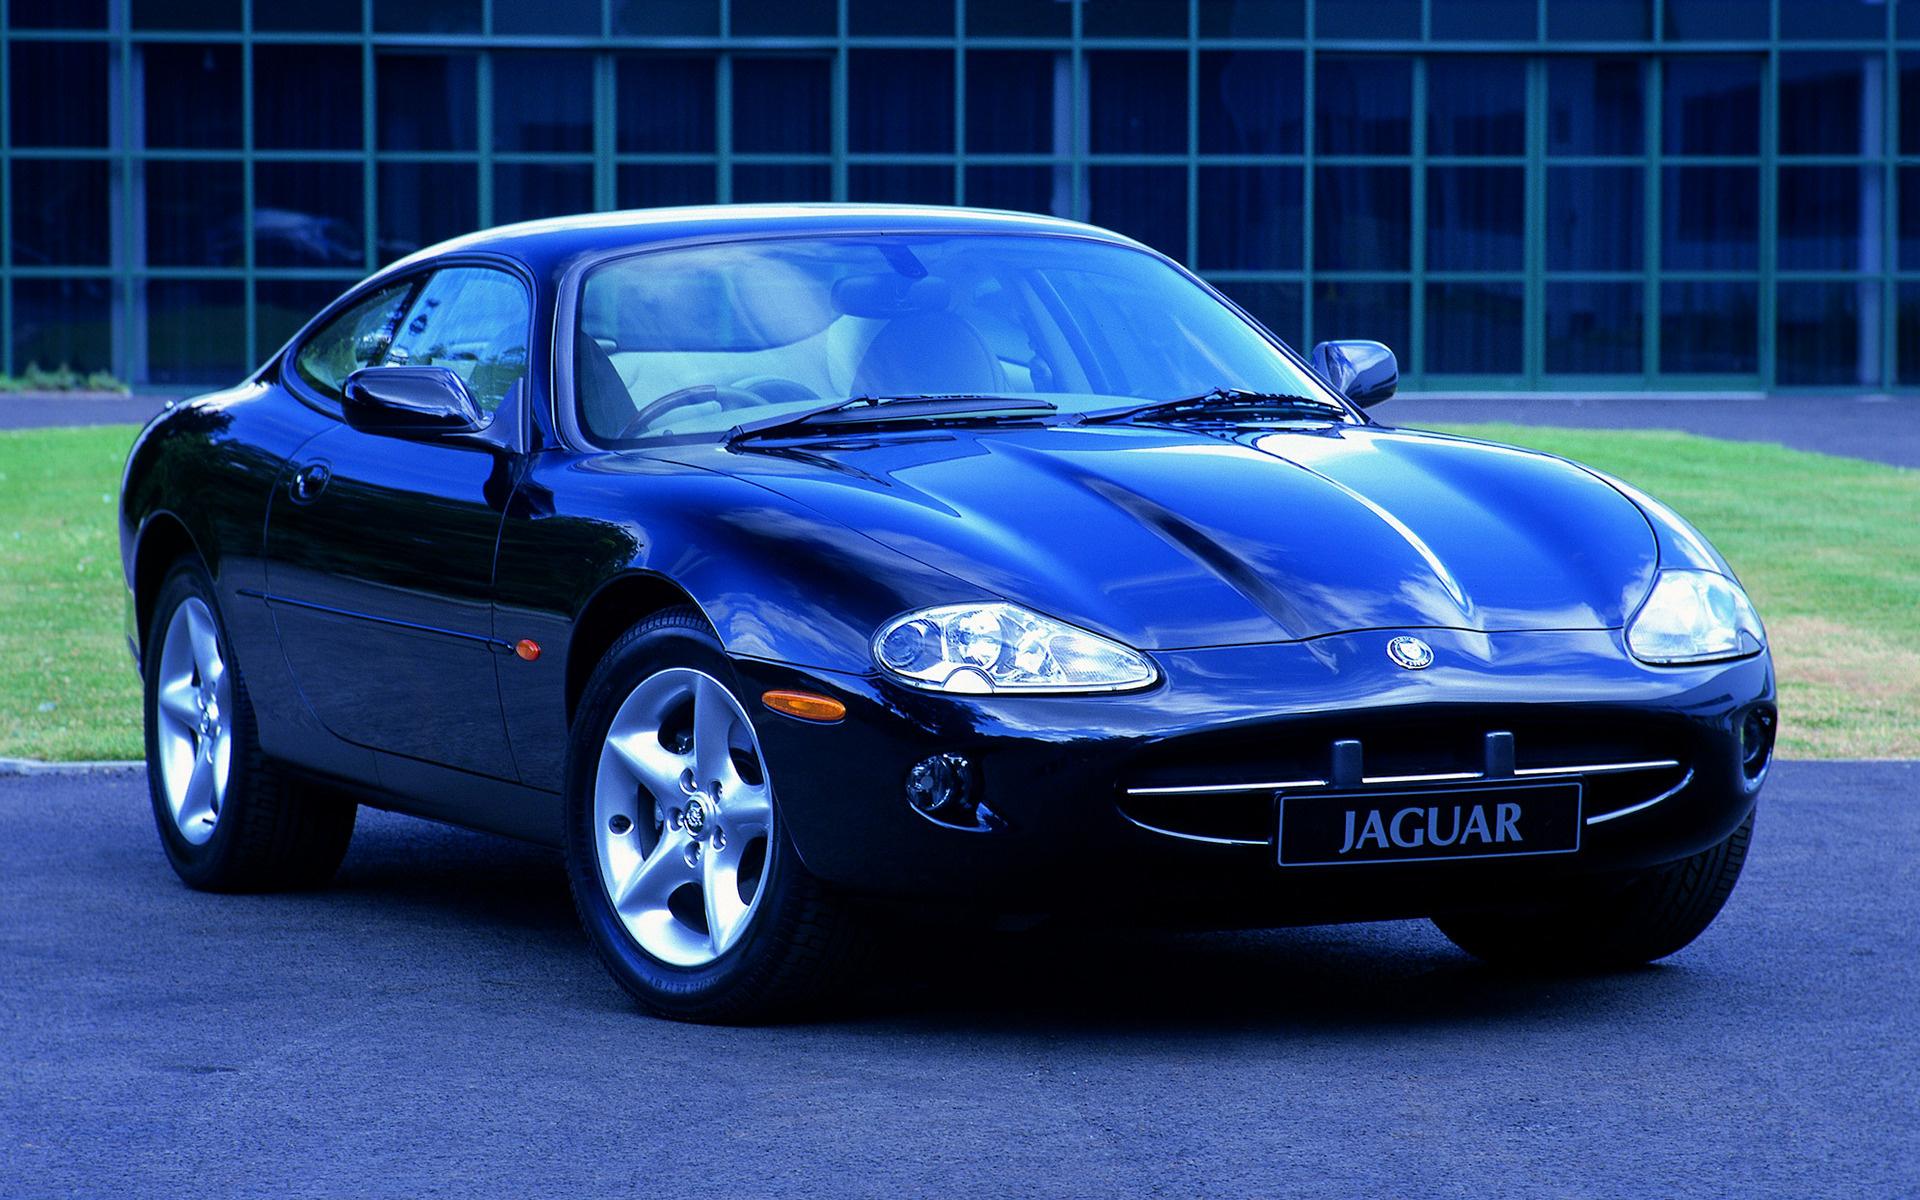 Jaguar XK8 Coupe (UK) and HD Image